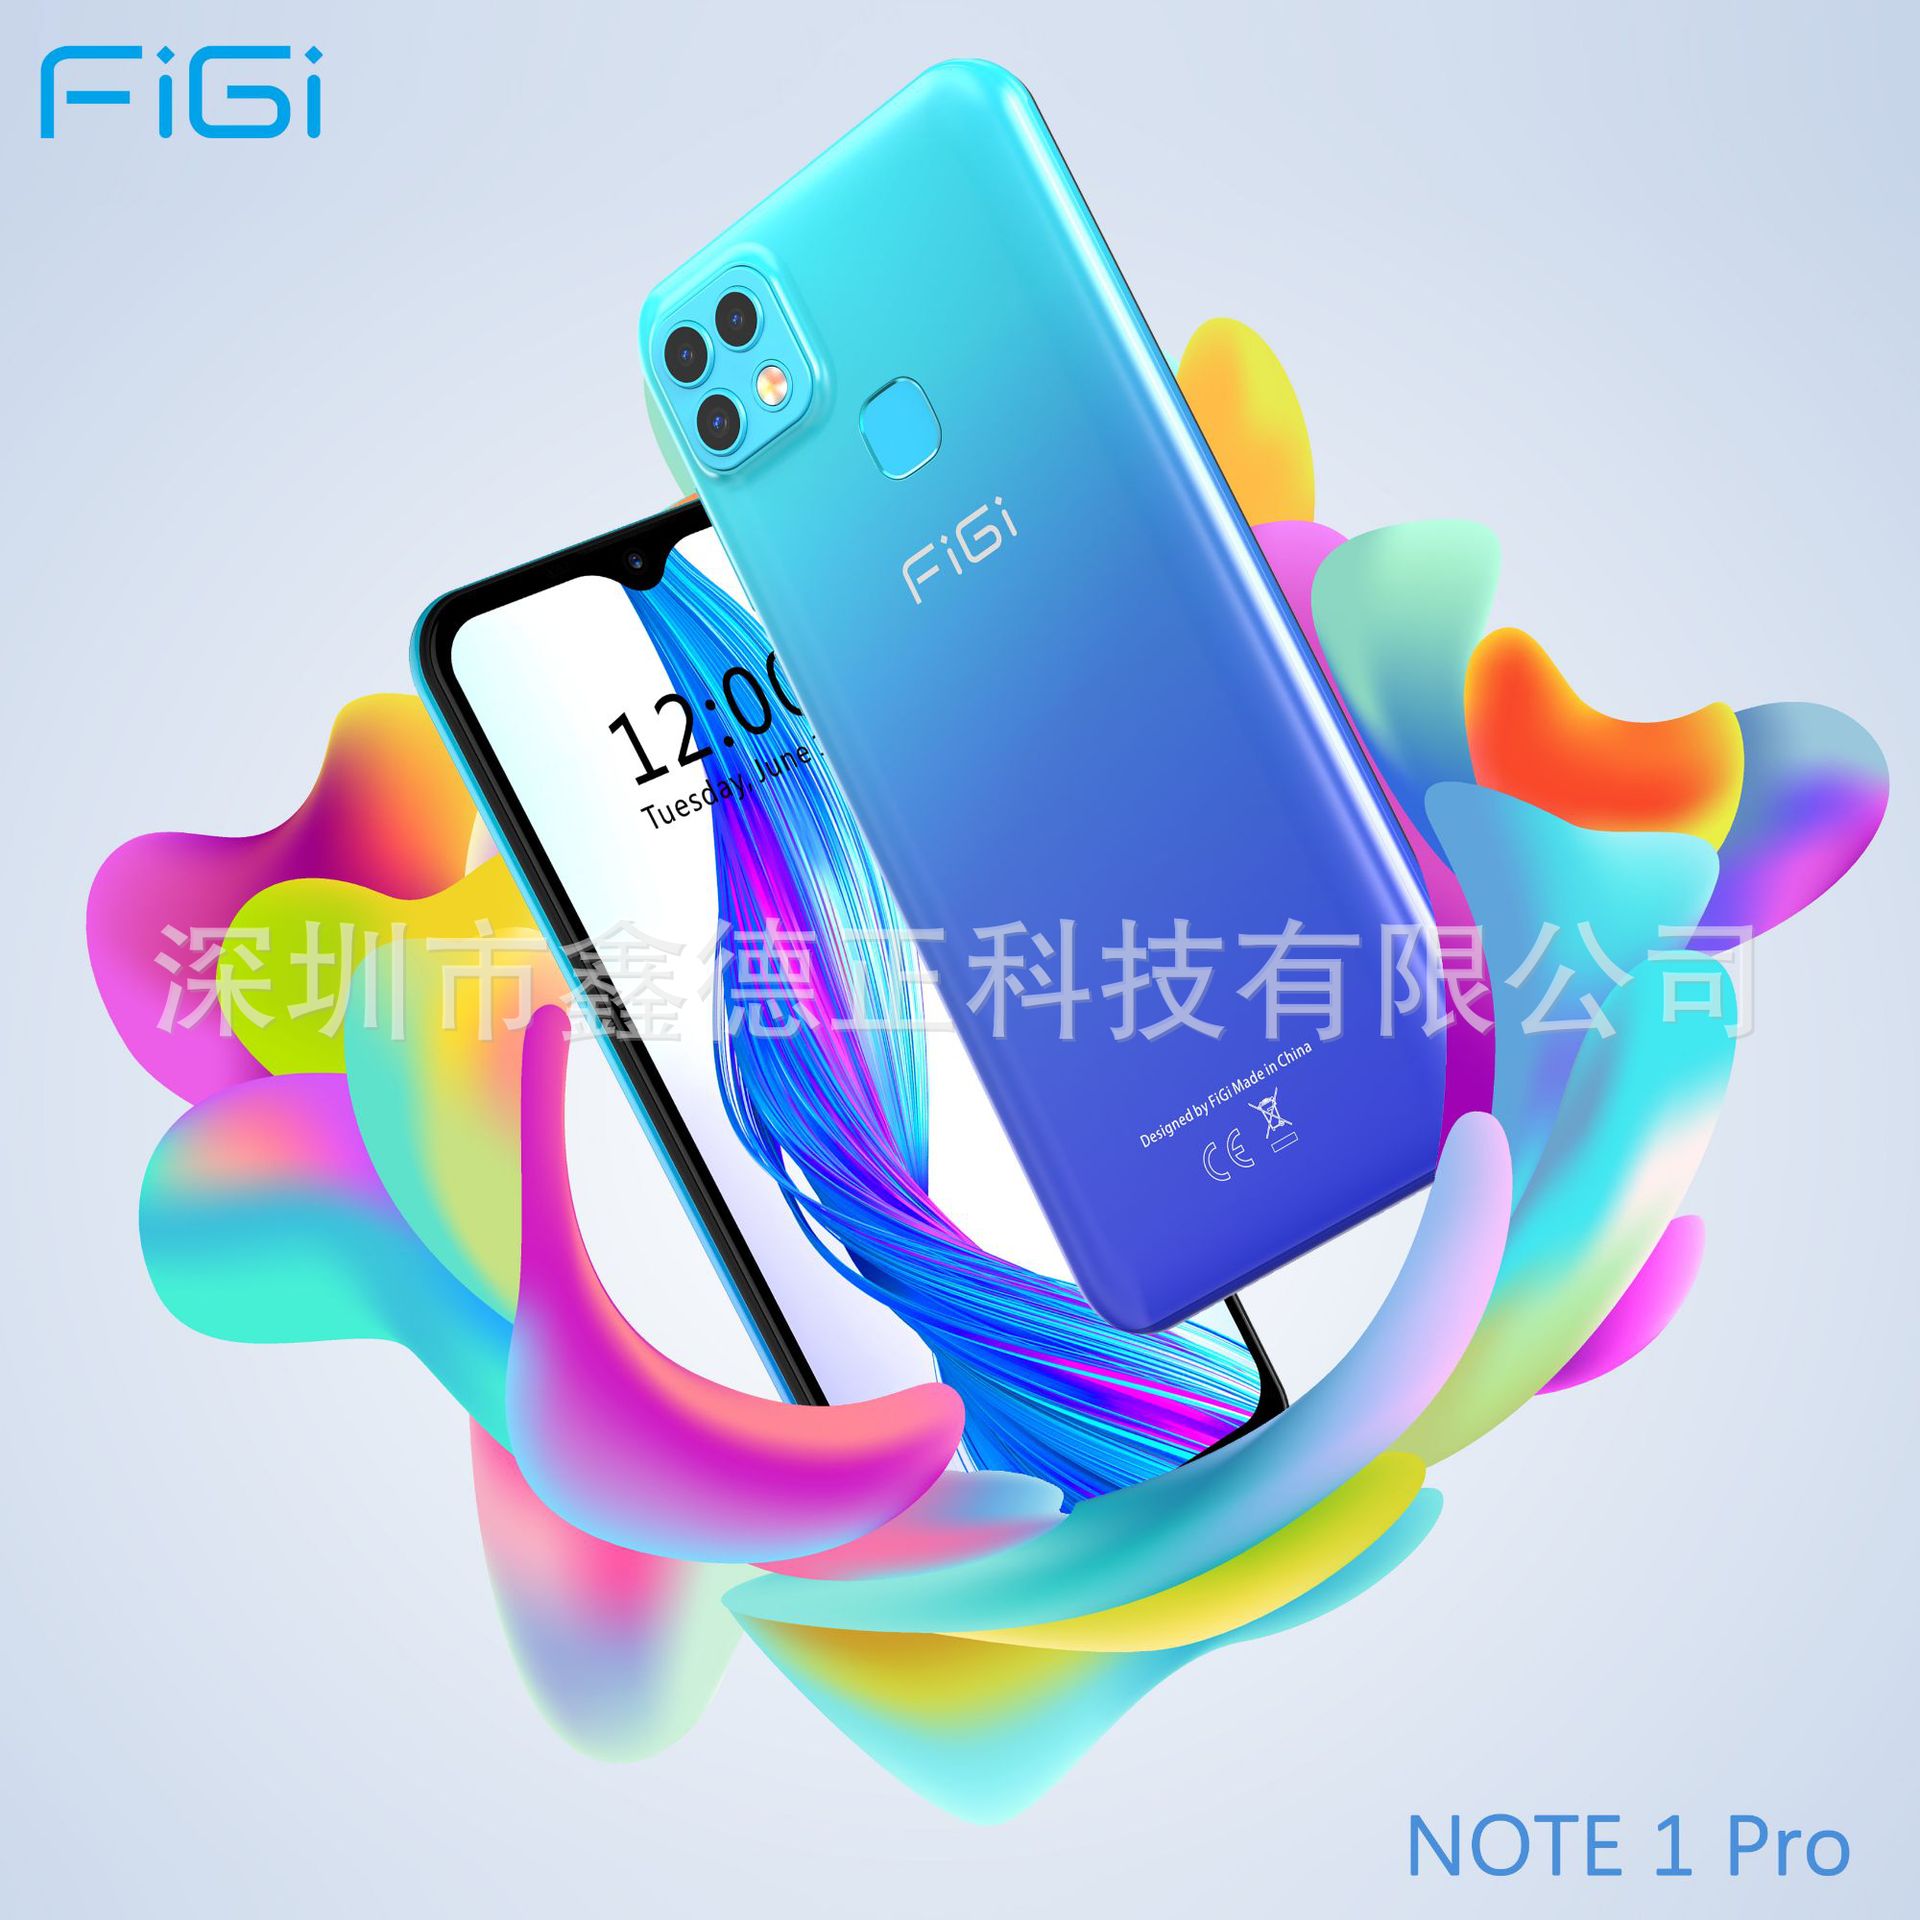 FIGI note 1 pro 智能手机 MT6757D Octa core 4G 128G 6.53 inch